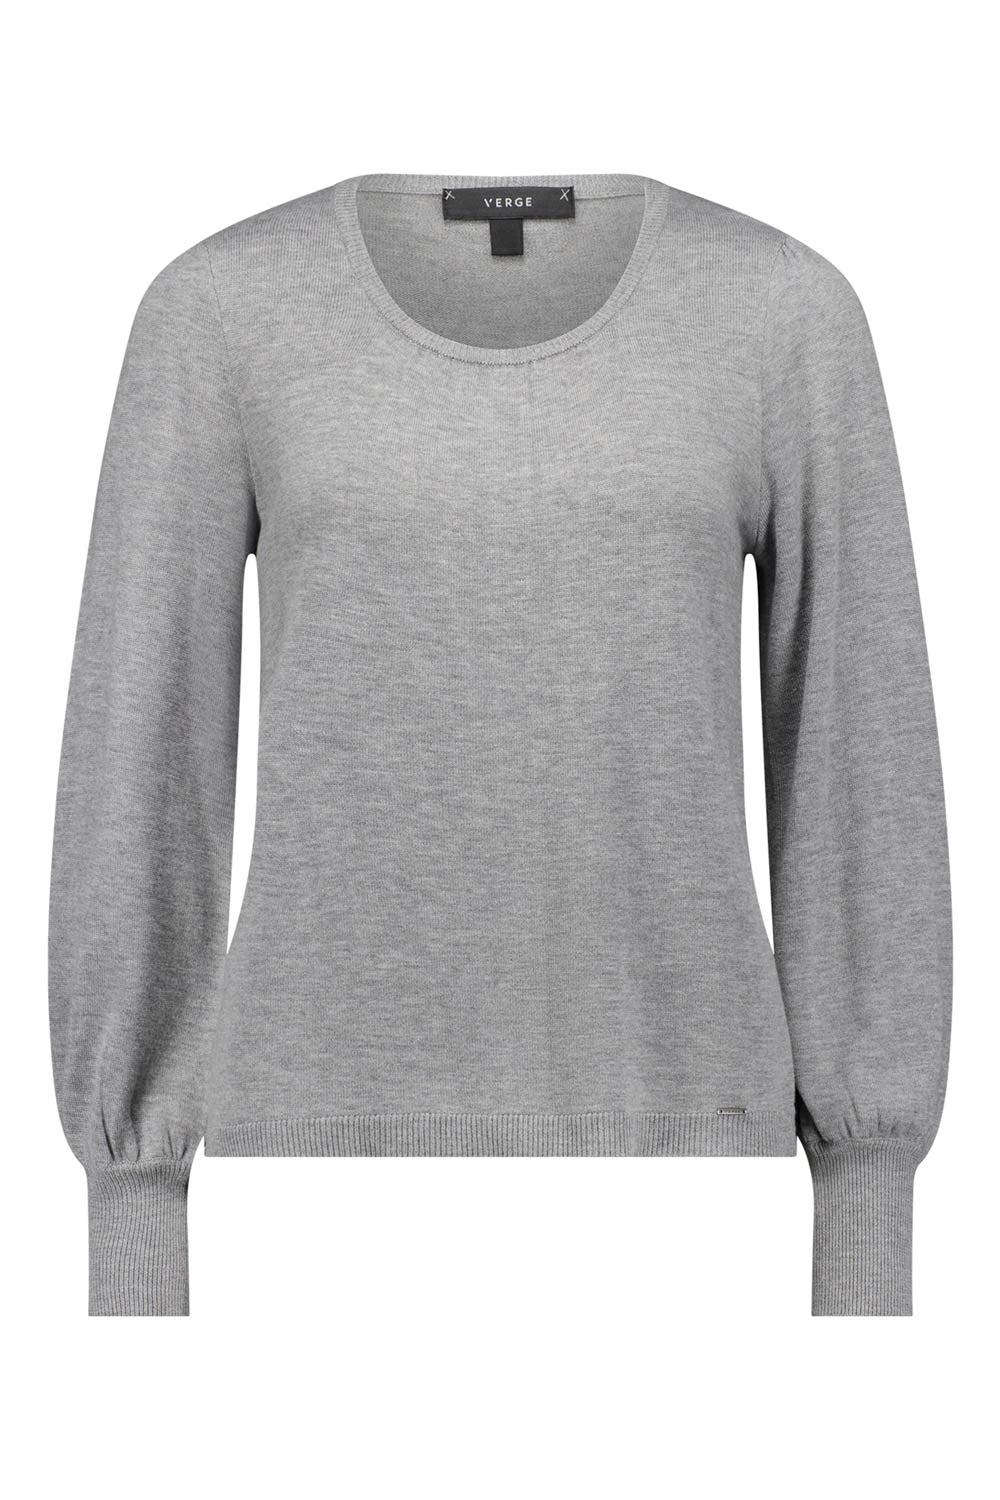 Arena Sweater - Grey Marle